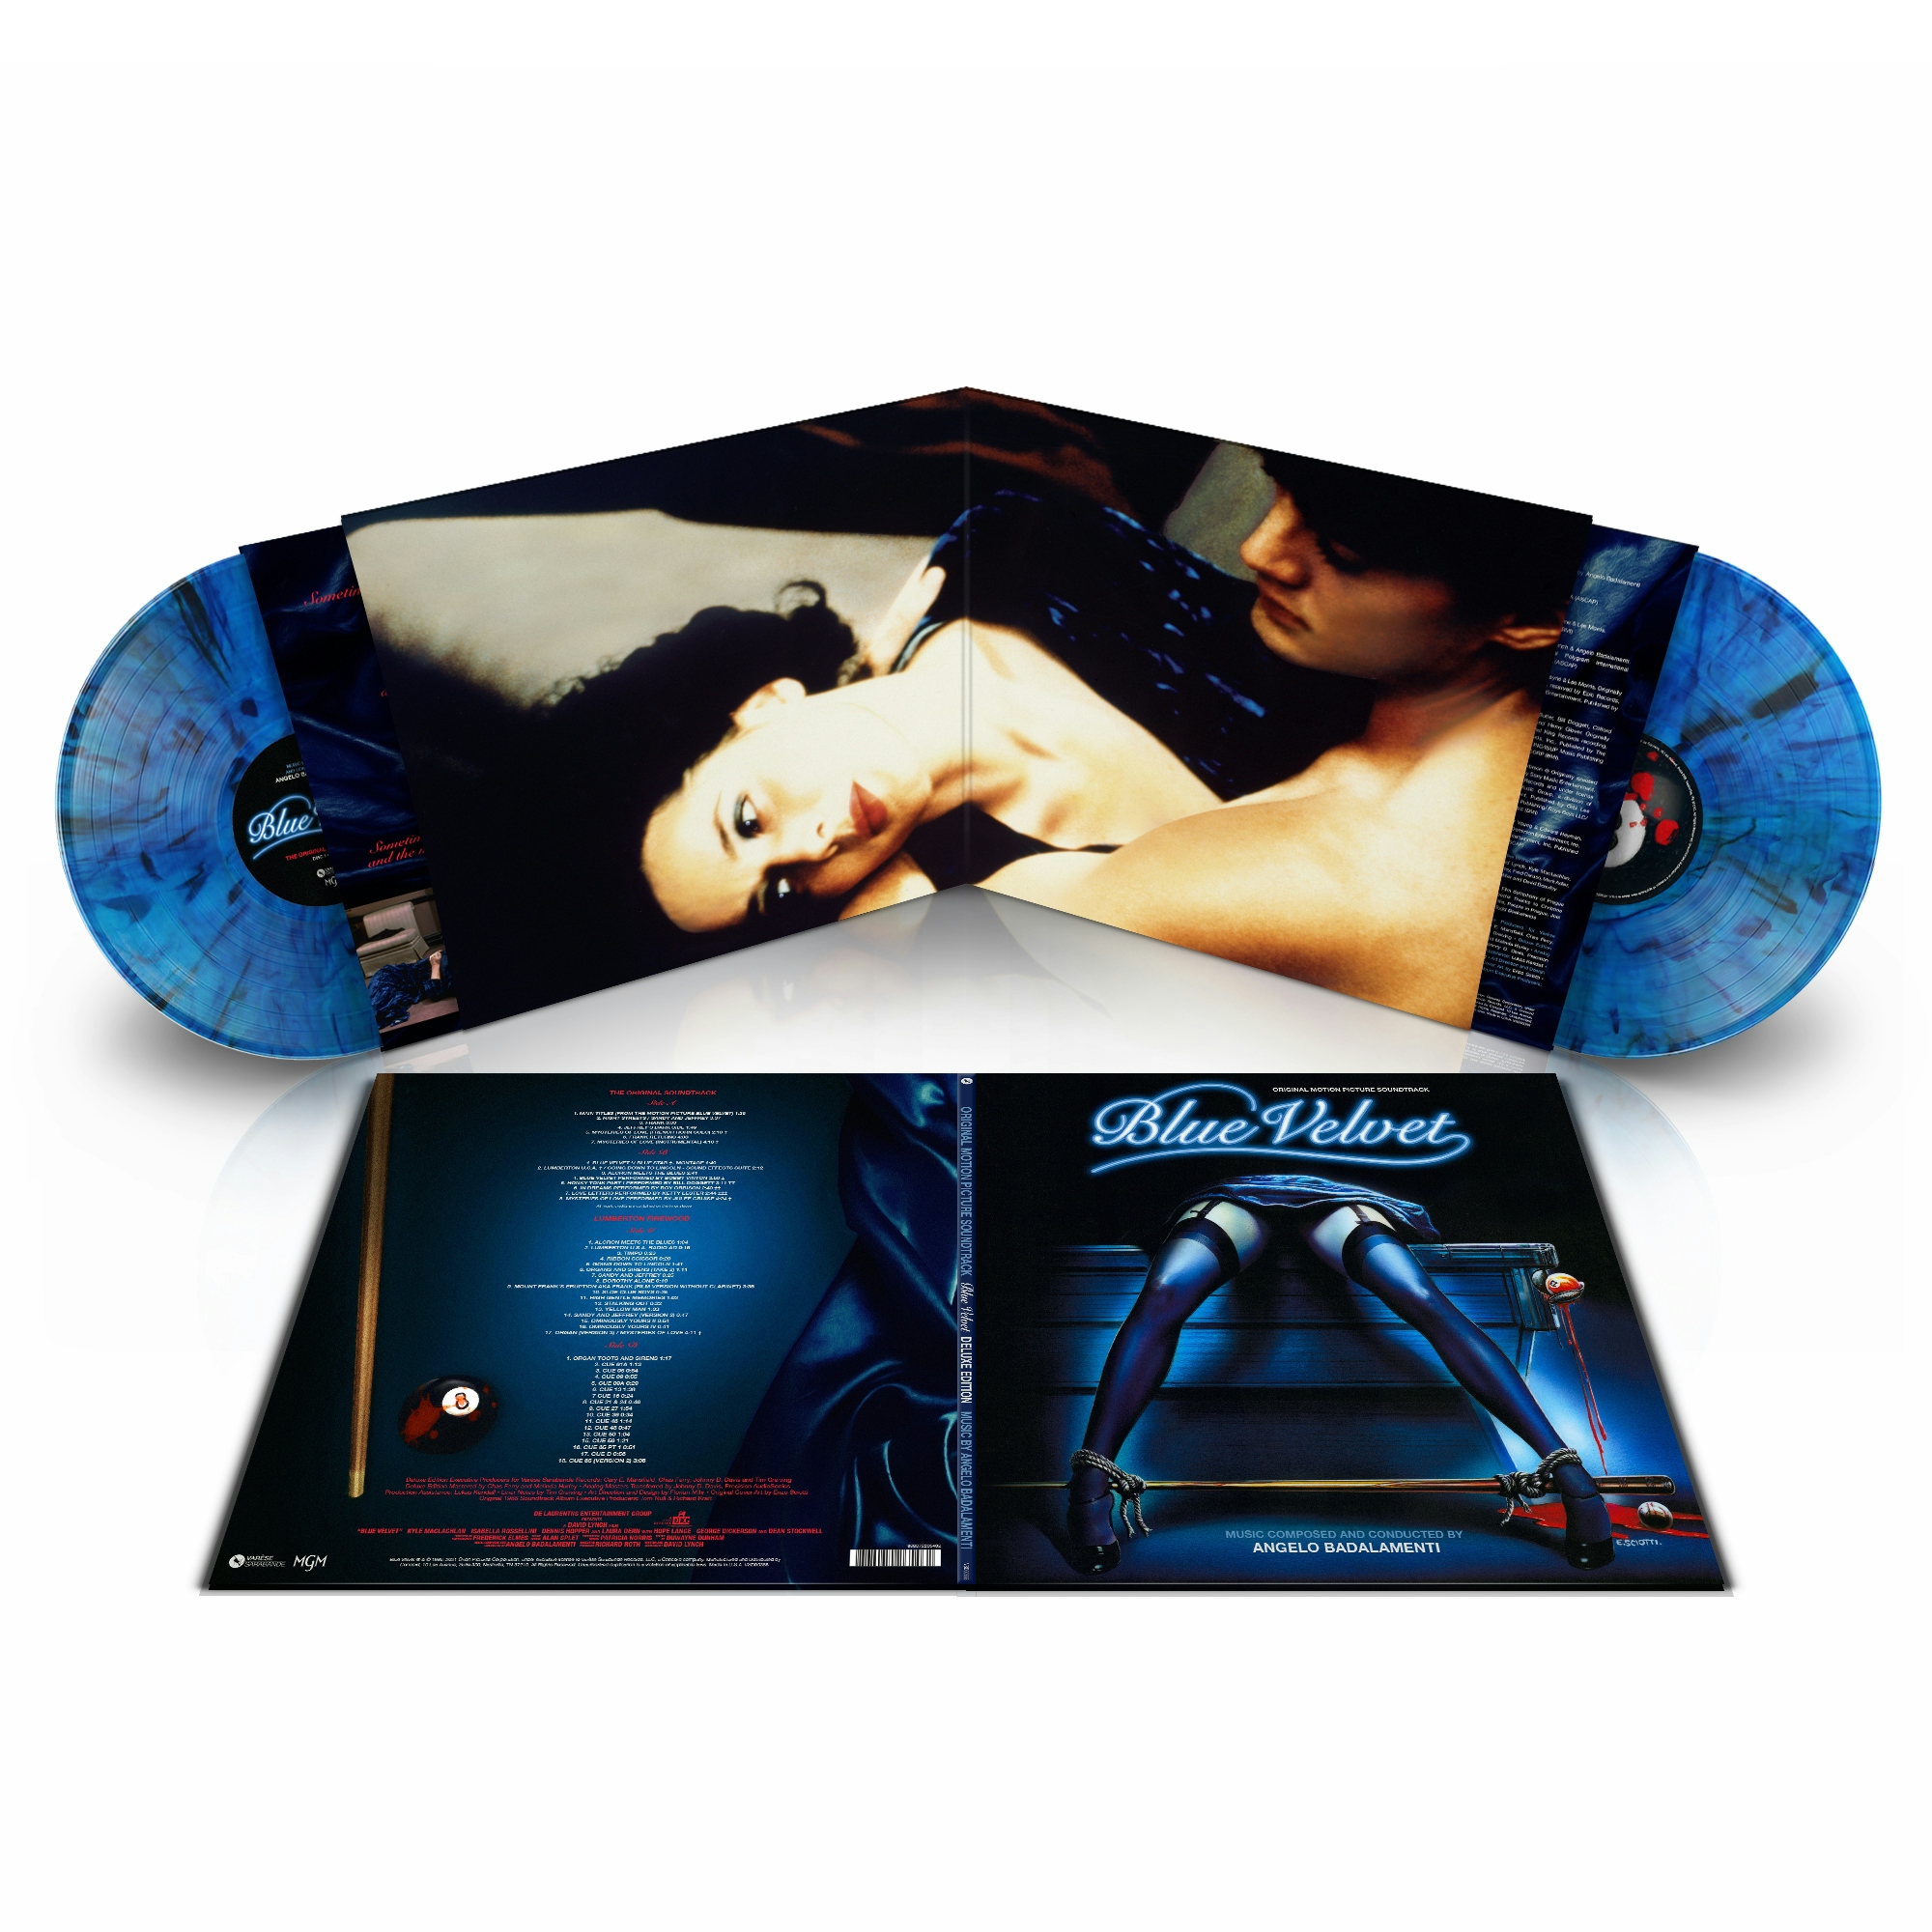 Album artwork for Blue Velvet - Original Motion Picture Soundtrack (Deluxe Edition) by Angelo Badalamenti